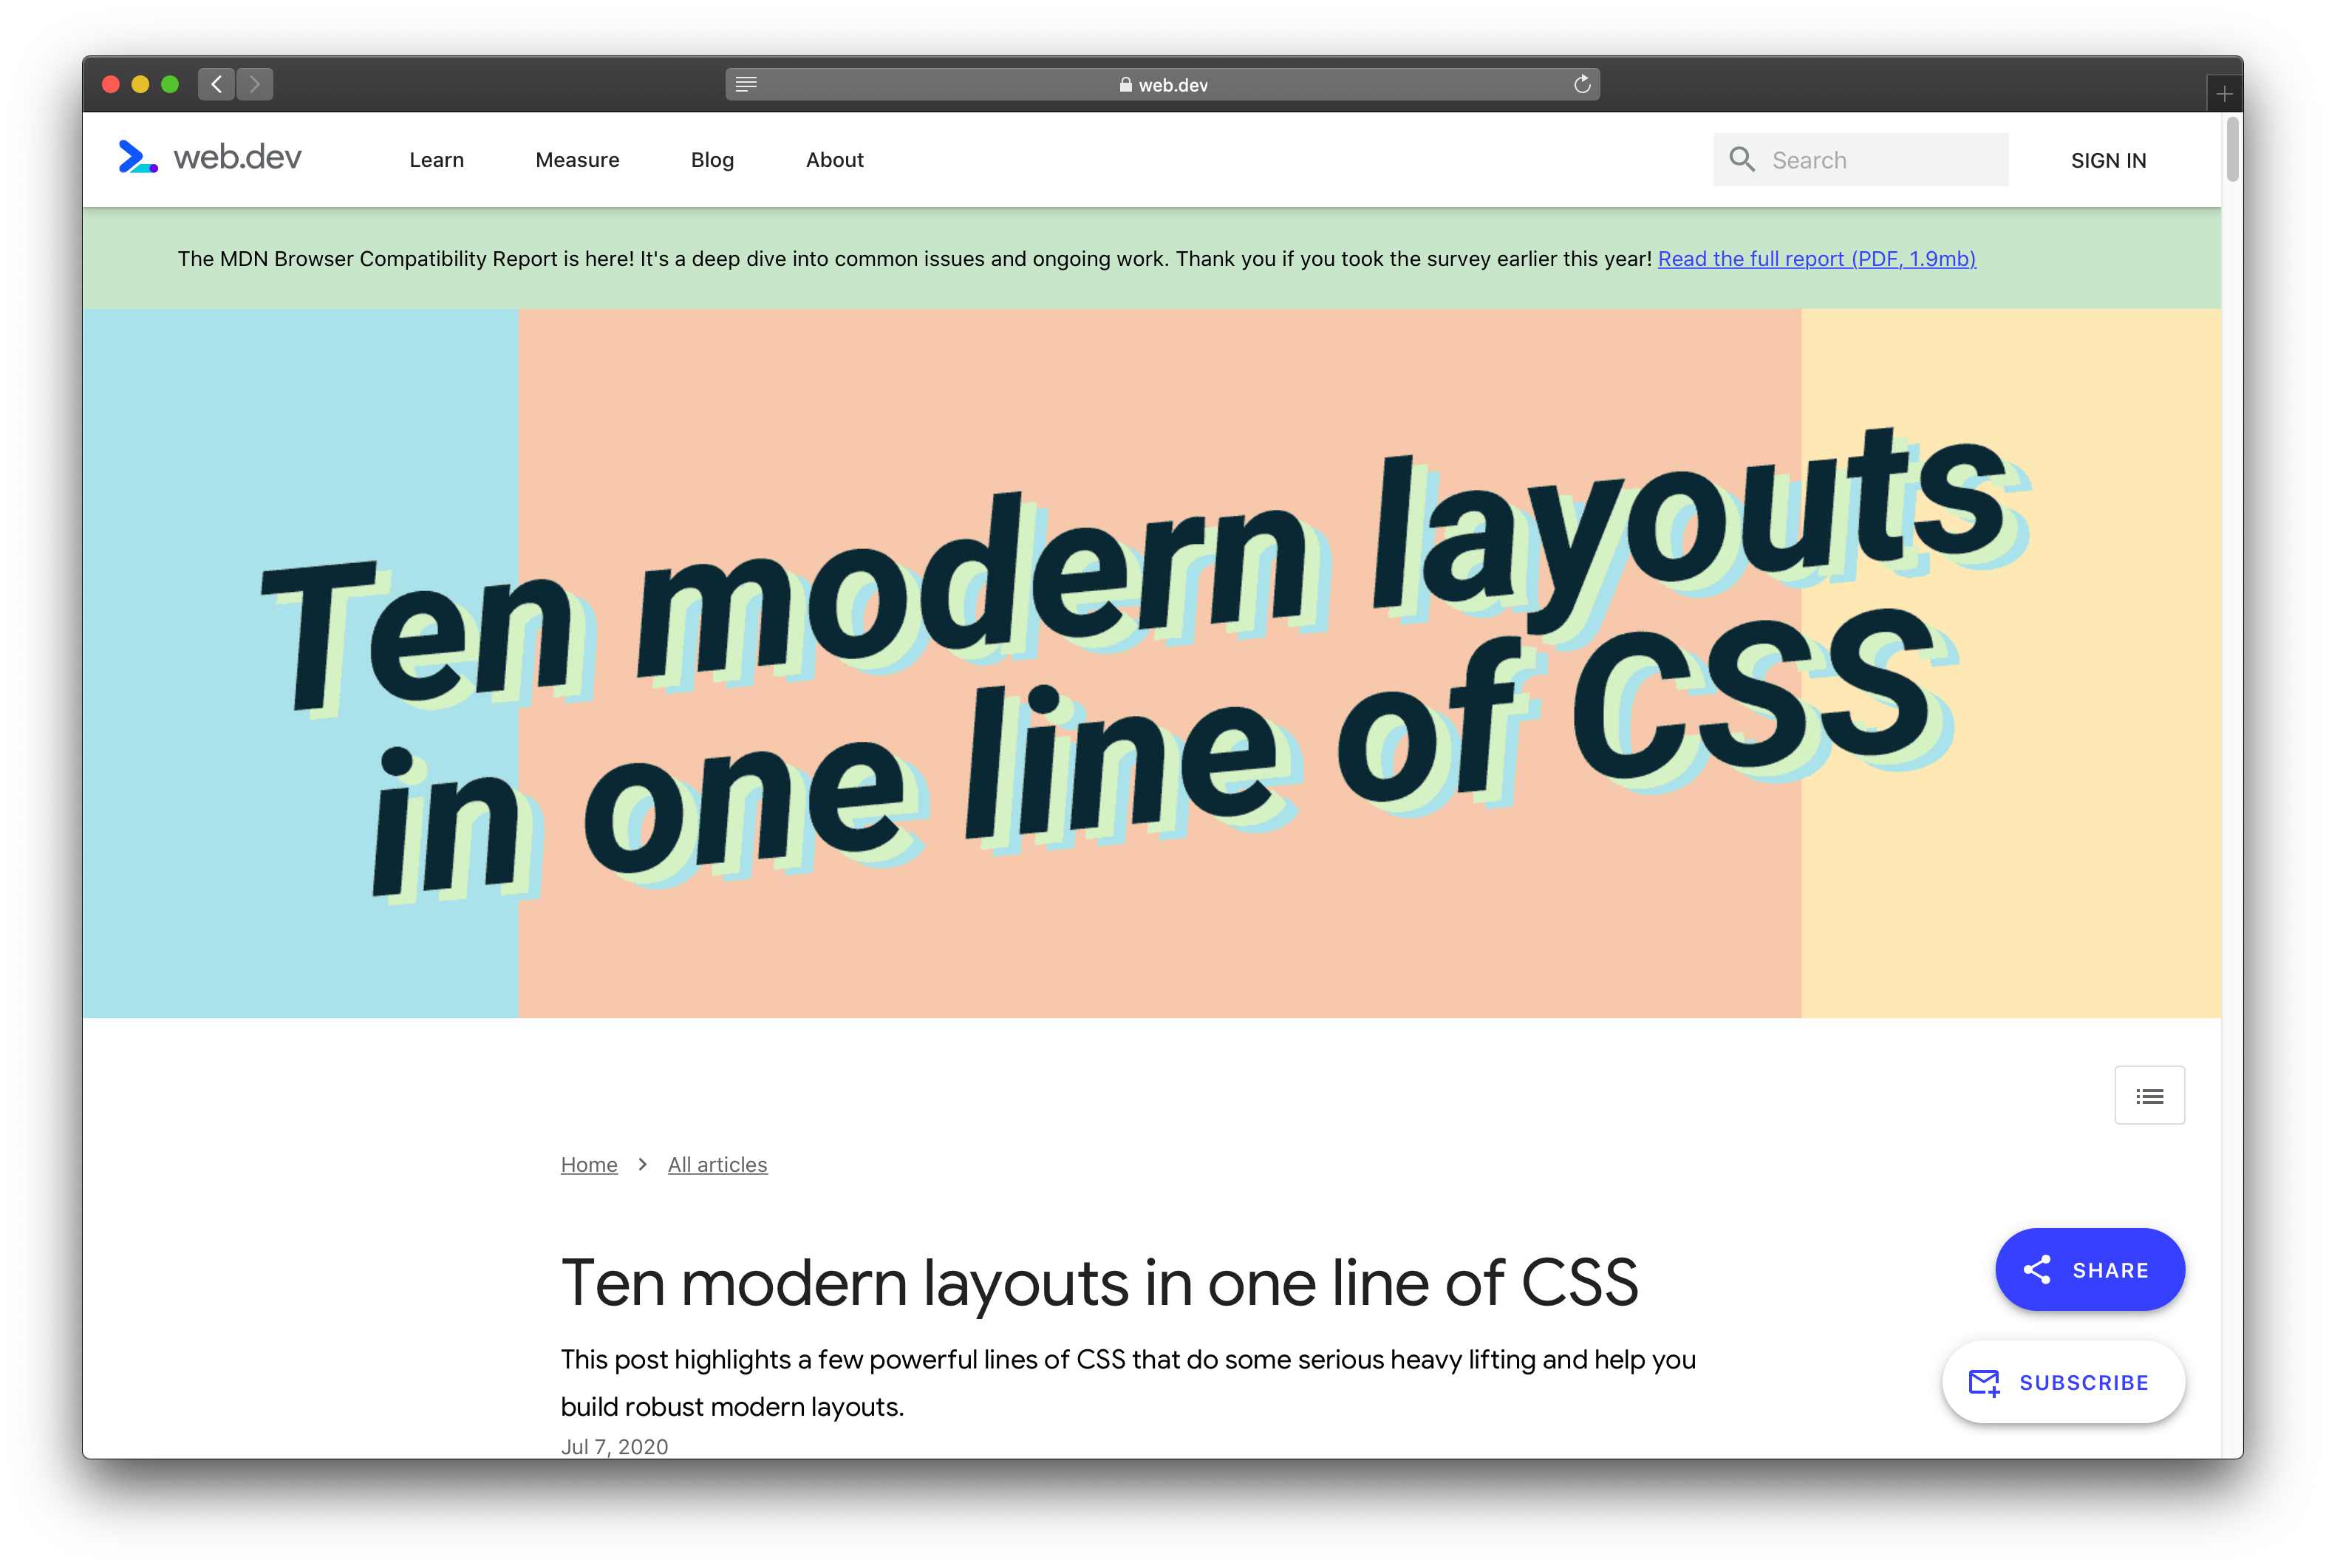 Ten modern layouts in one line of CSS website